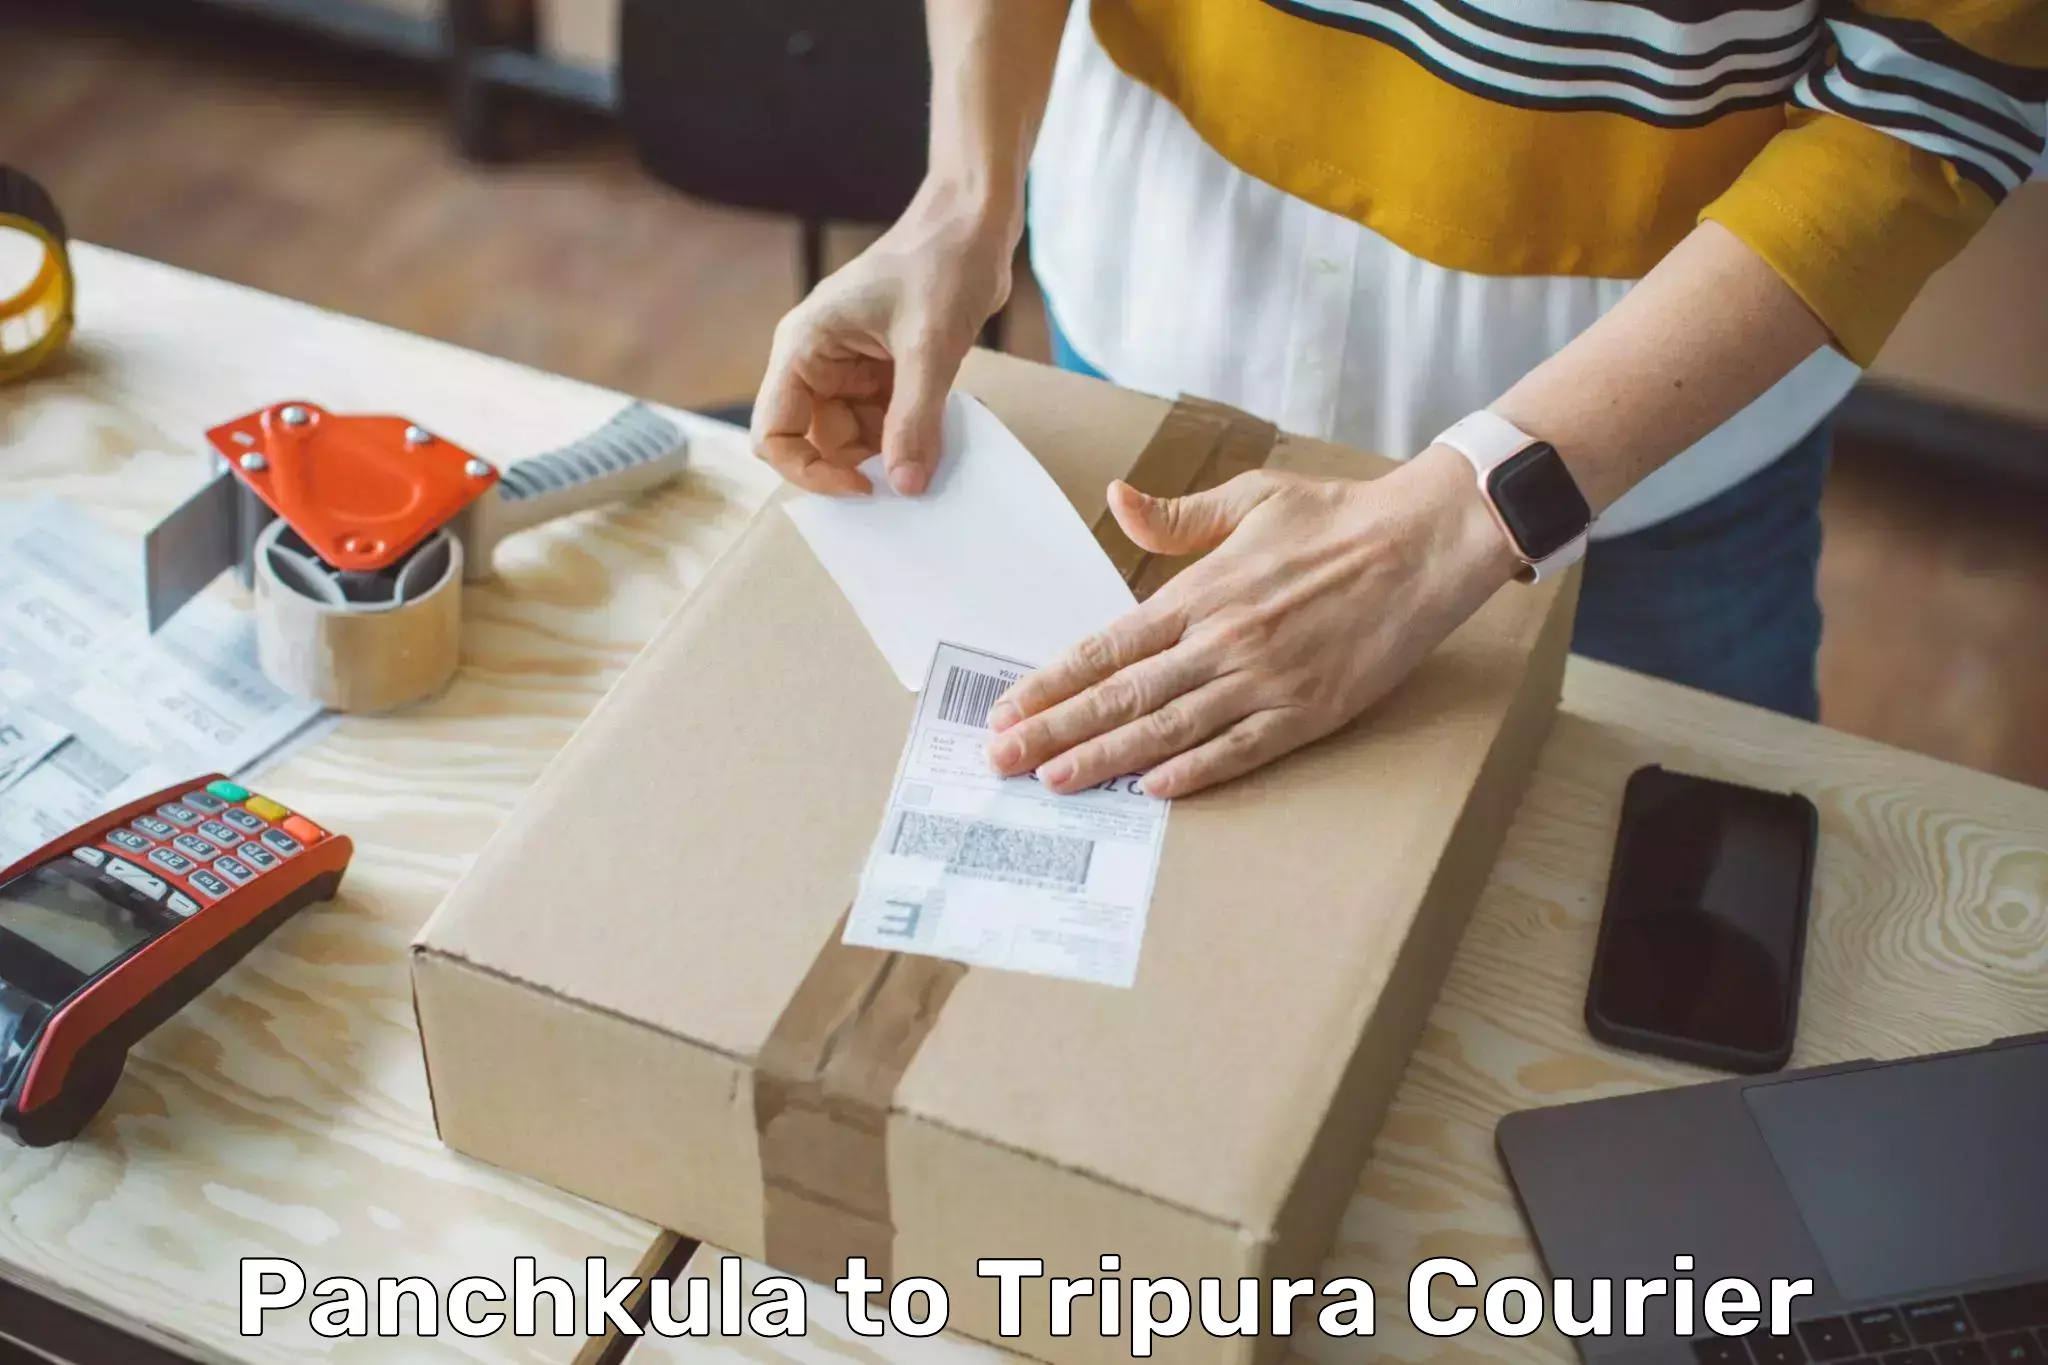 Global courier networks Panchkula to Udaipur Tripura